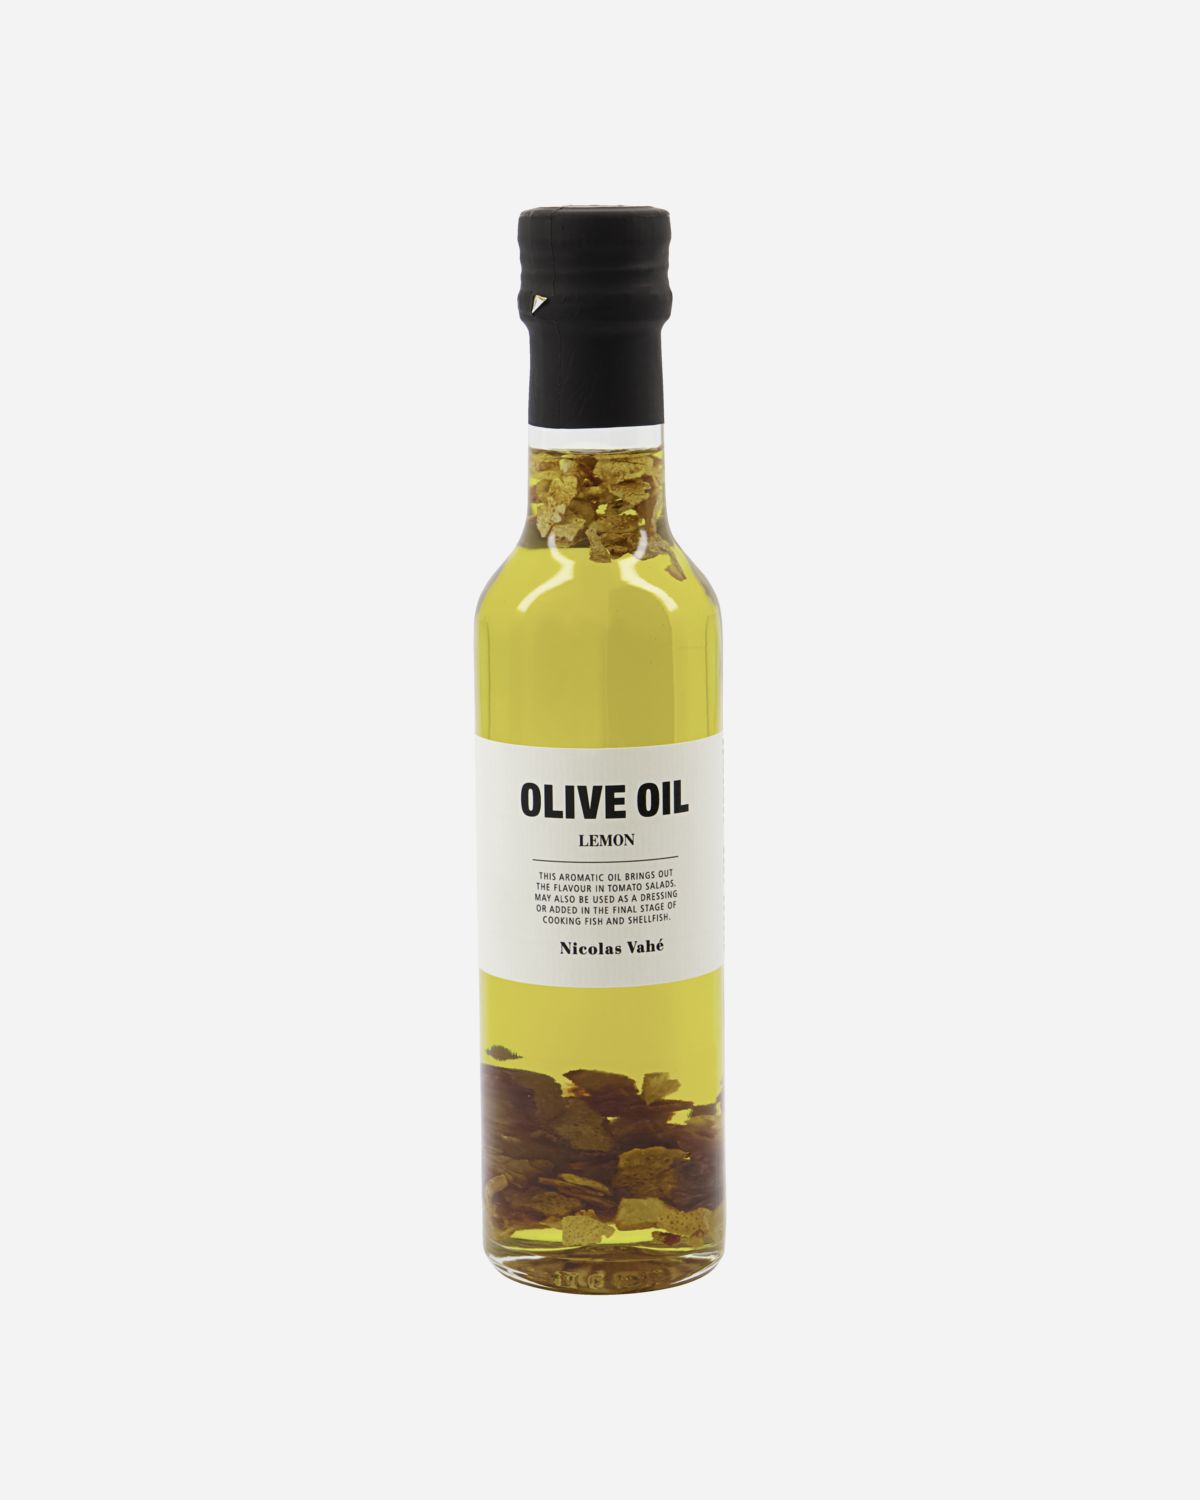 Olive oil with lemon, 25 cl.